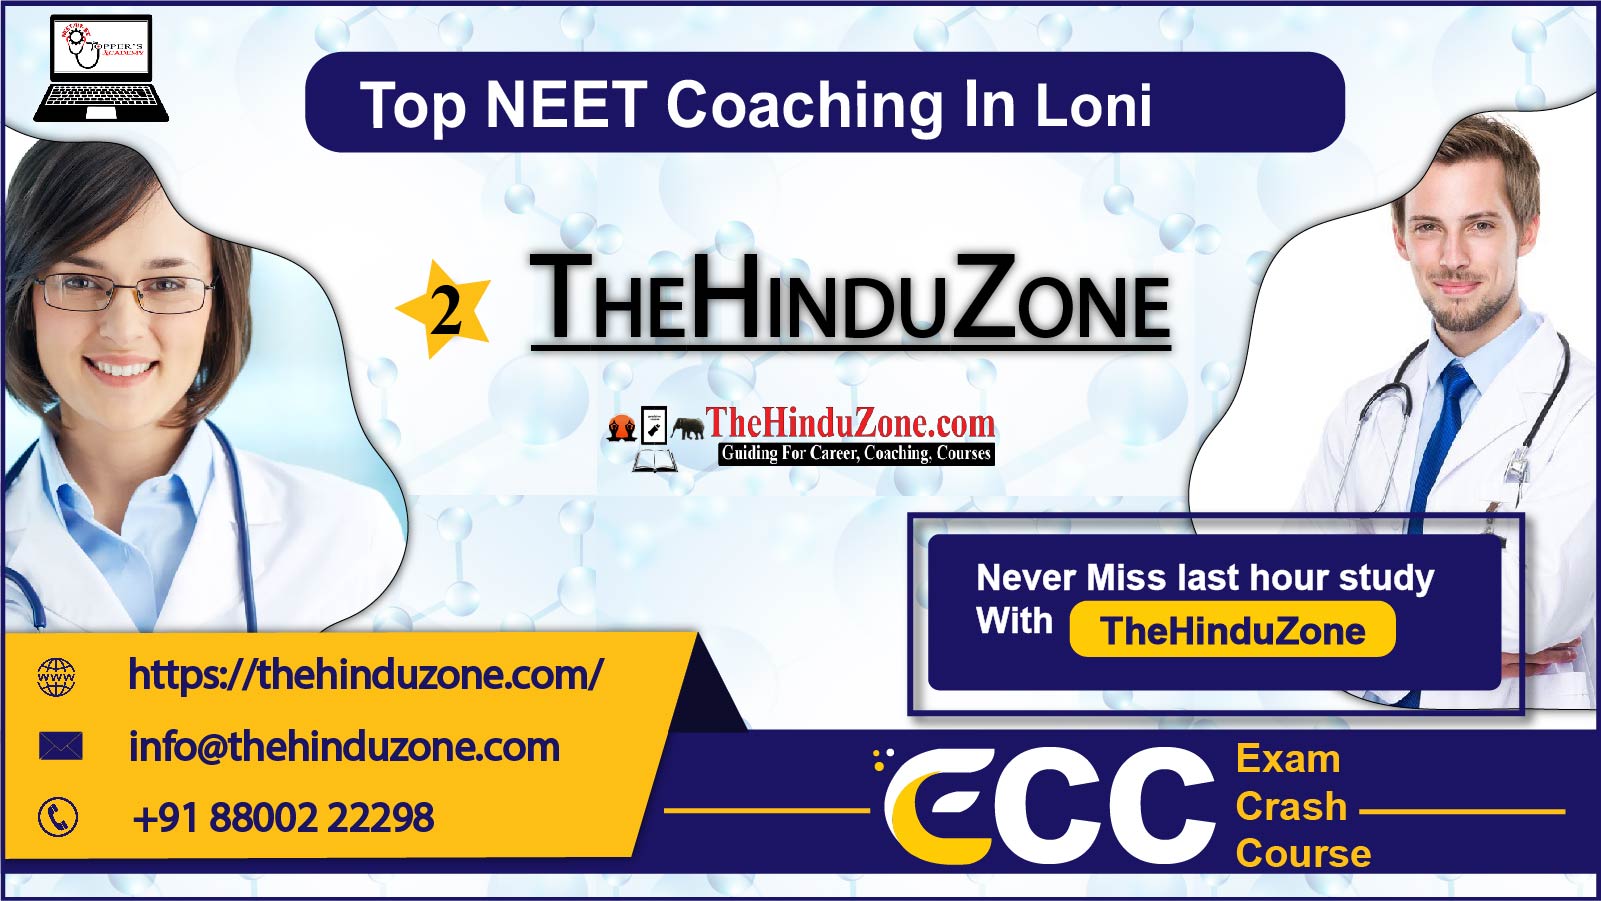 The Hinduzone NEET Coaching in Loni